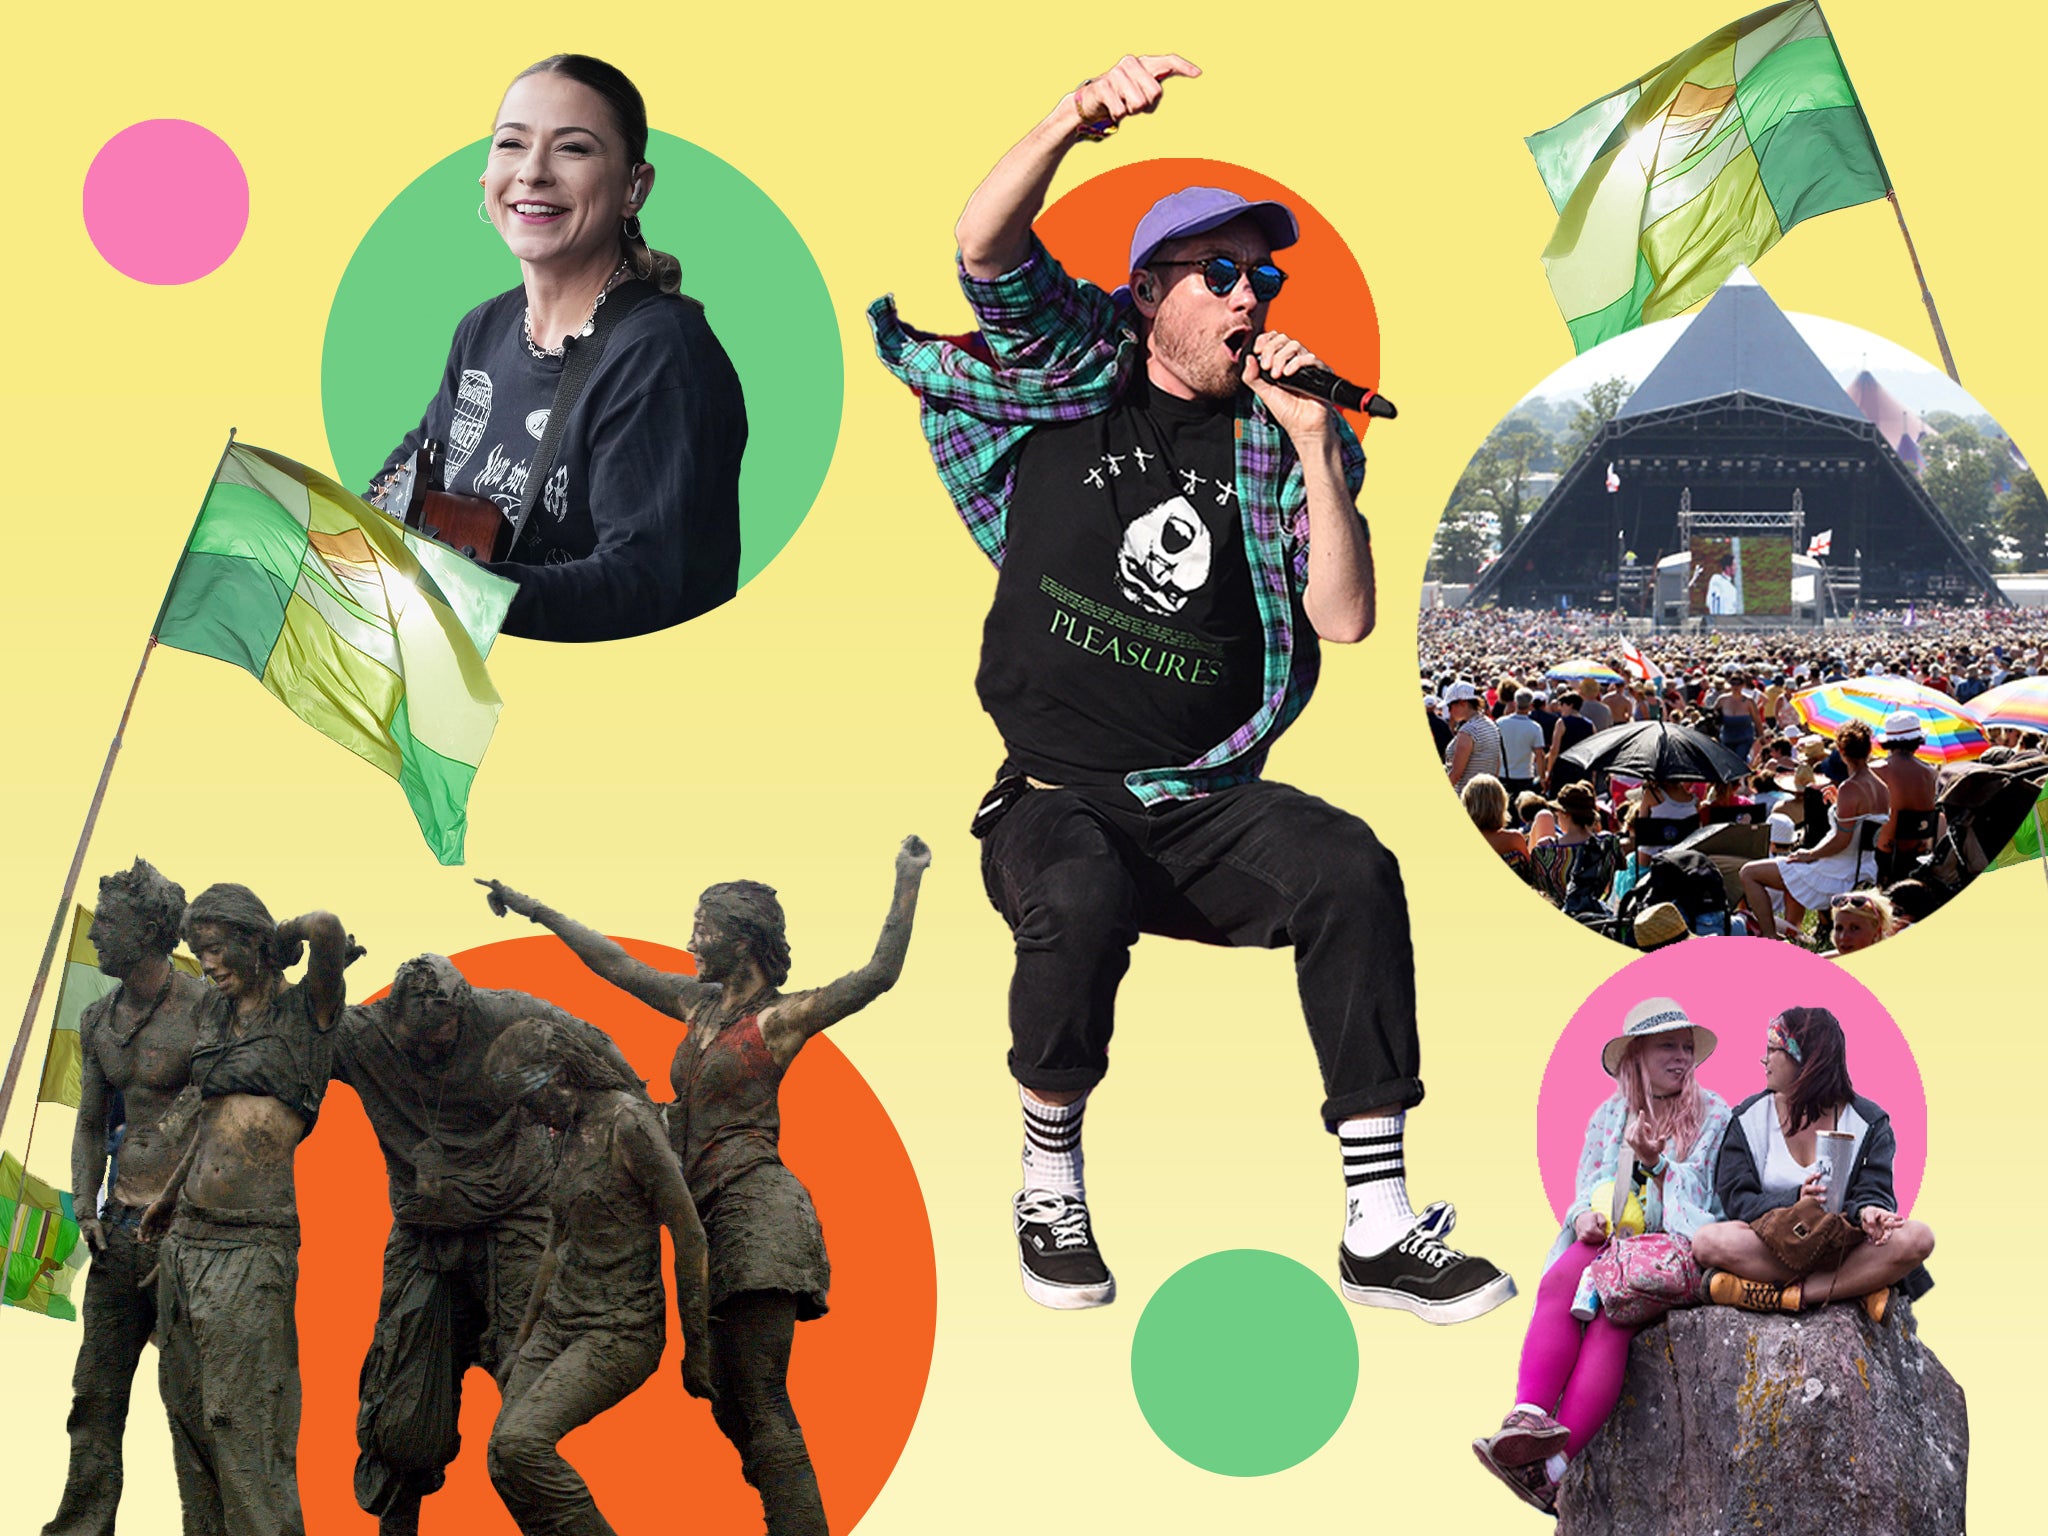 Top left clockwise: Lucy Spraggan, Bastille frontman Dan Smith, and scenes from Glastonbury festival